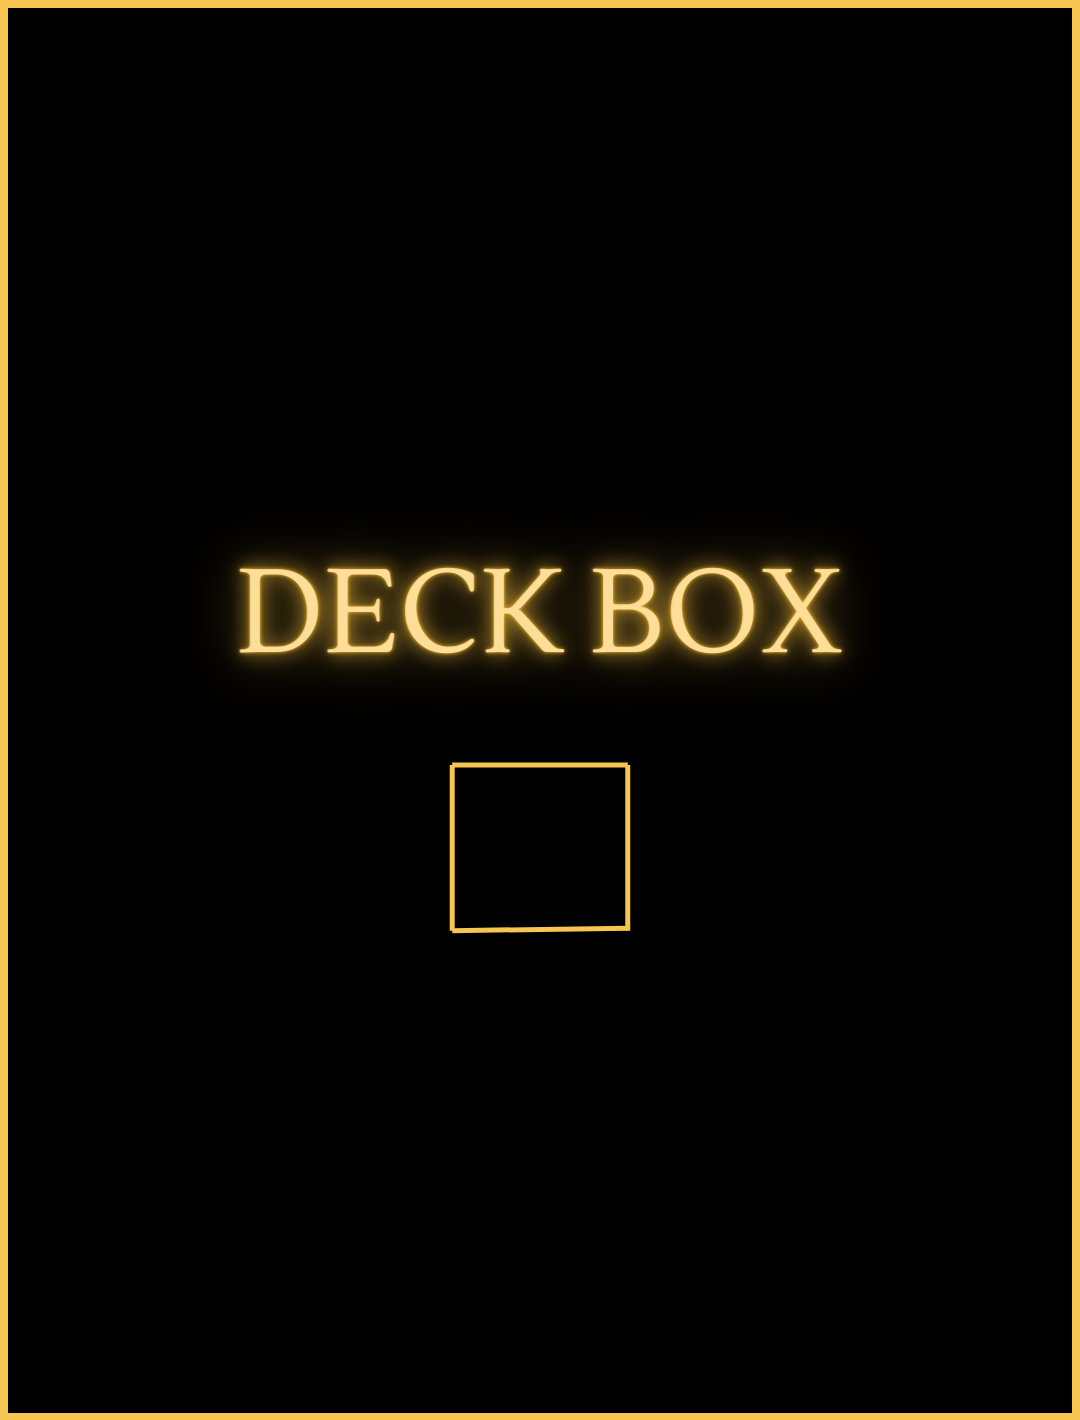 Deck box